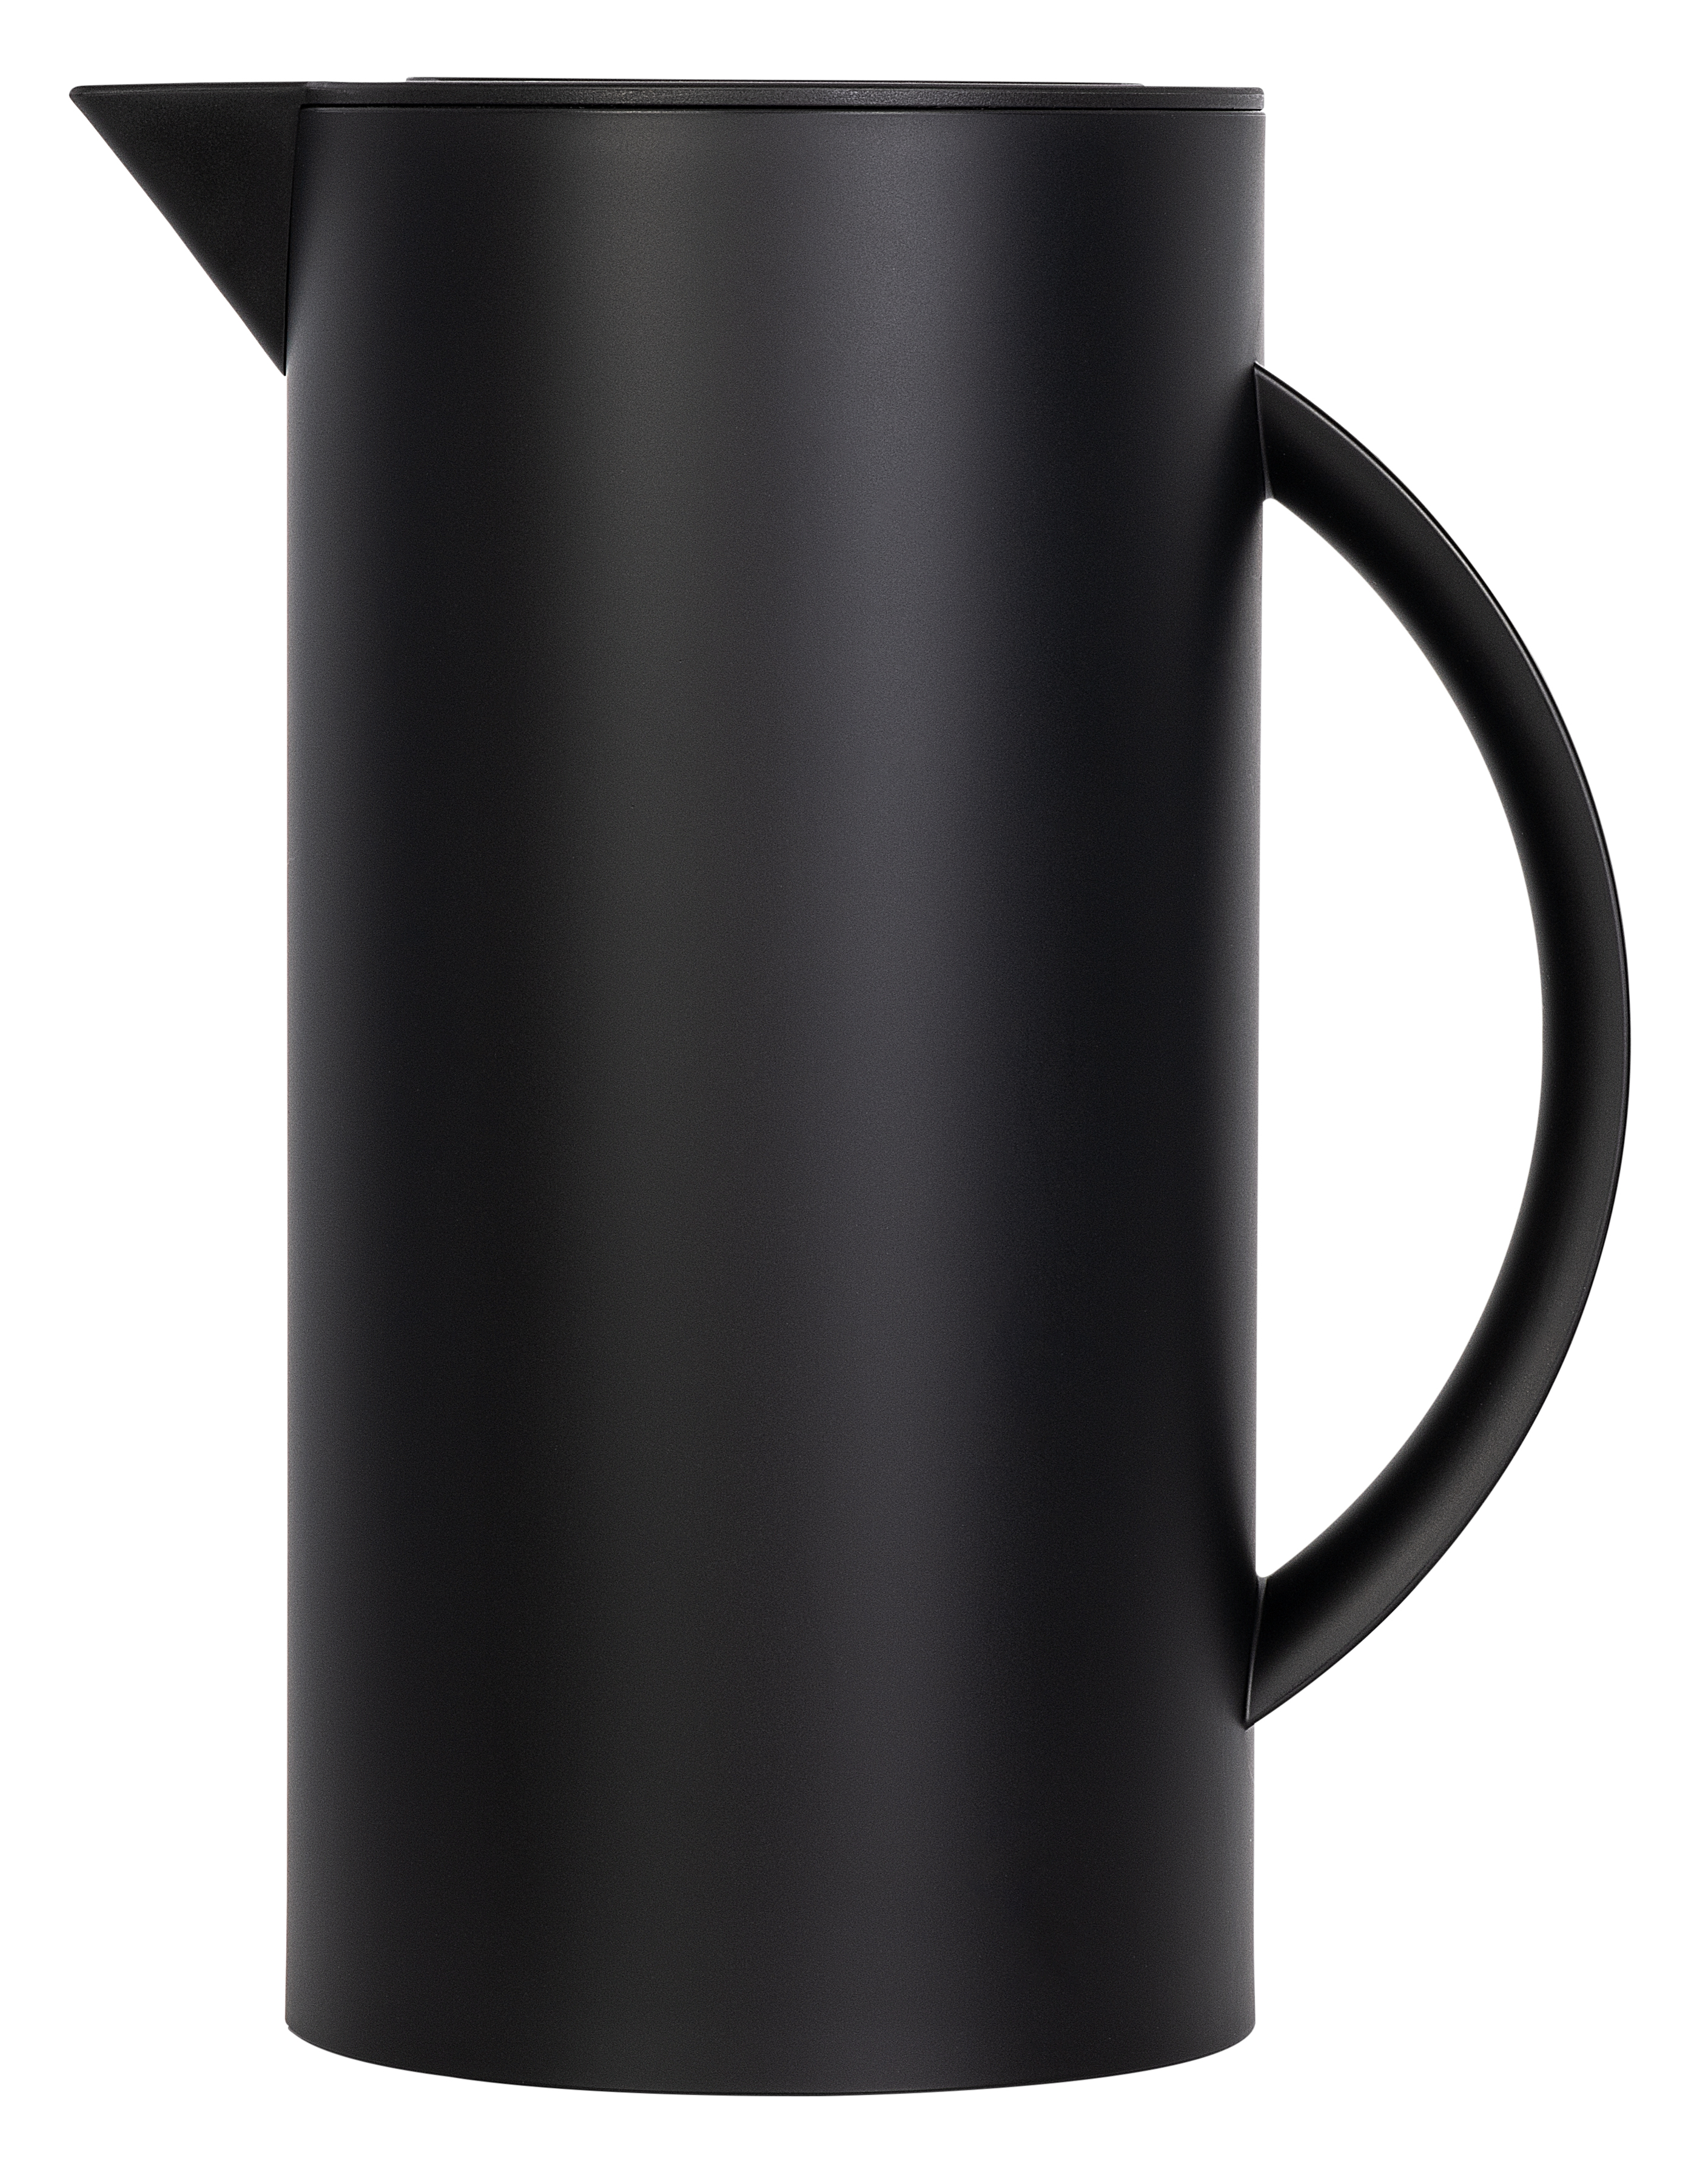 THEO Elegant 1 liter vacuum jug with glass flask